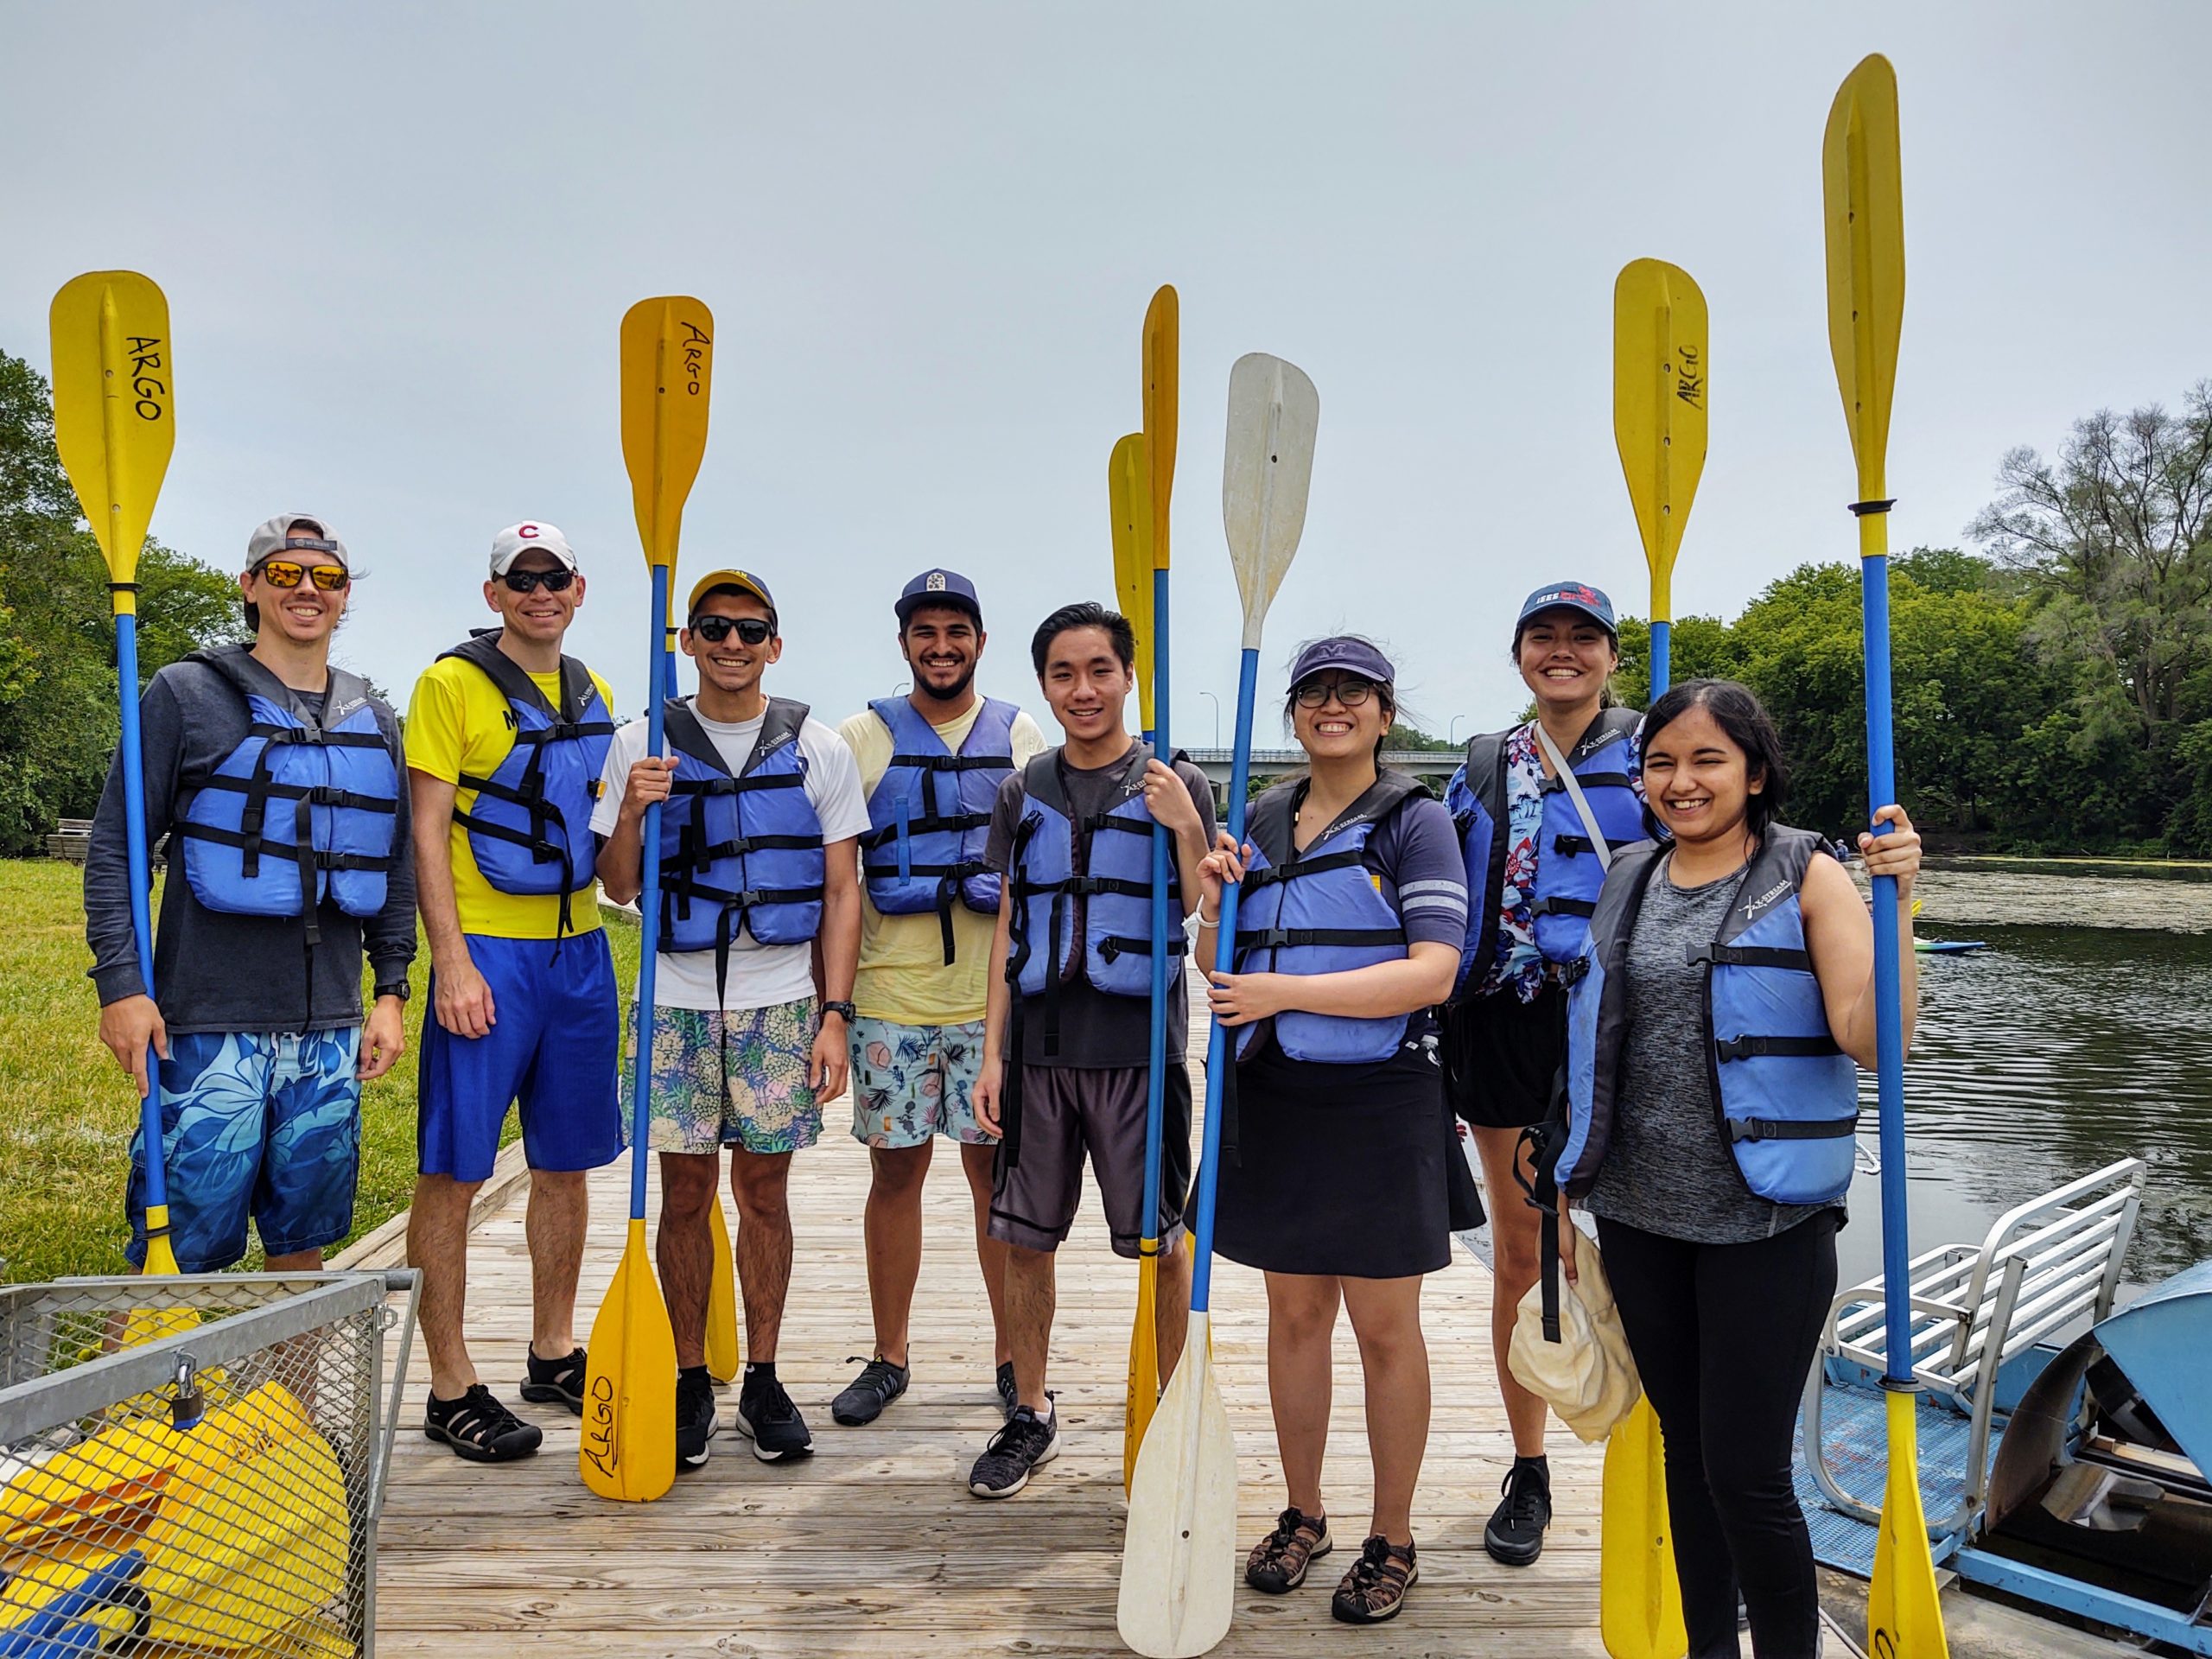 Group photo of people holding kayak paddles